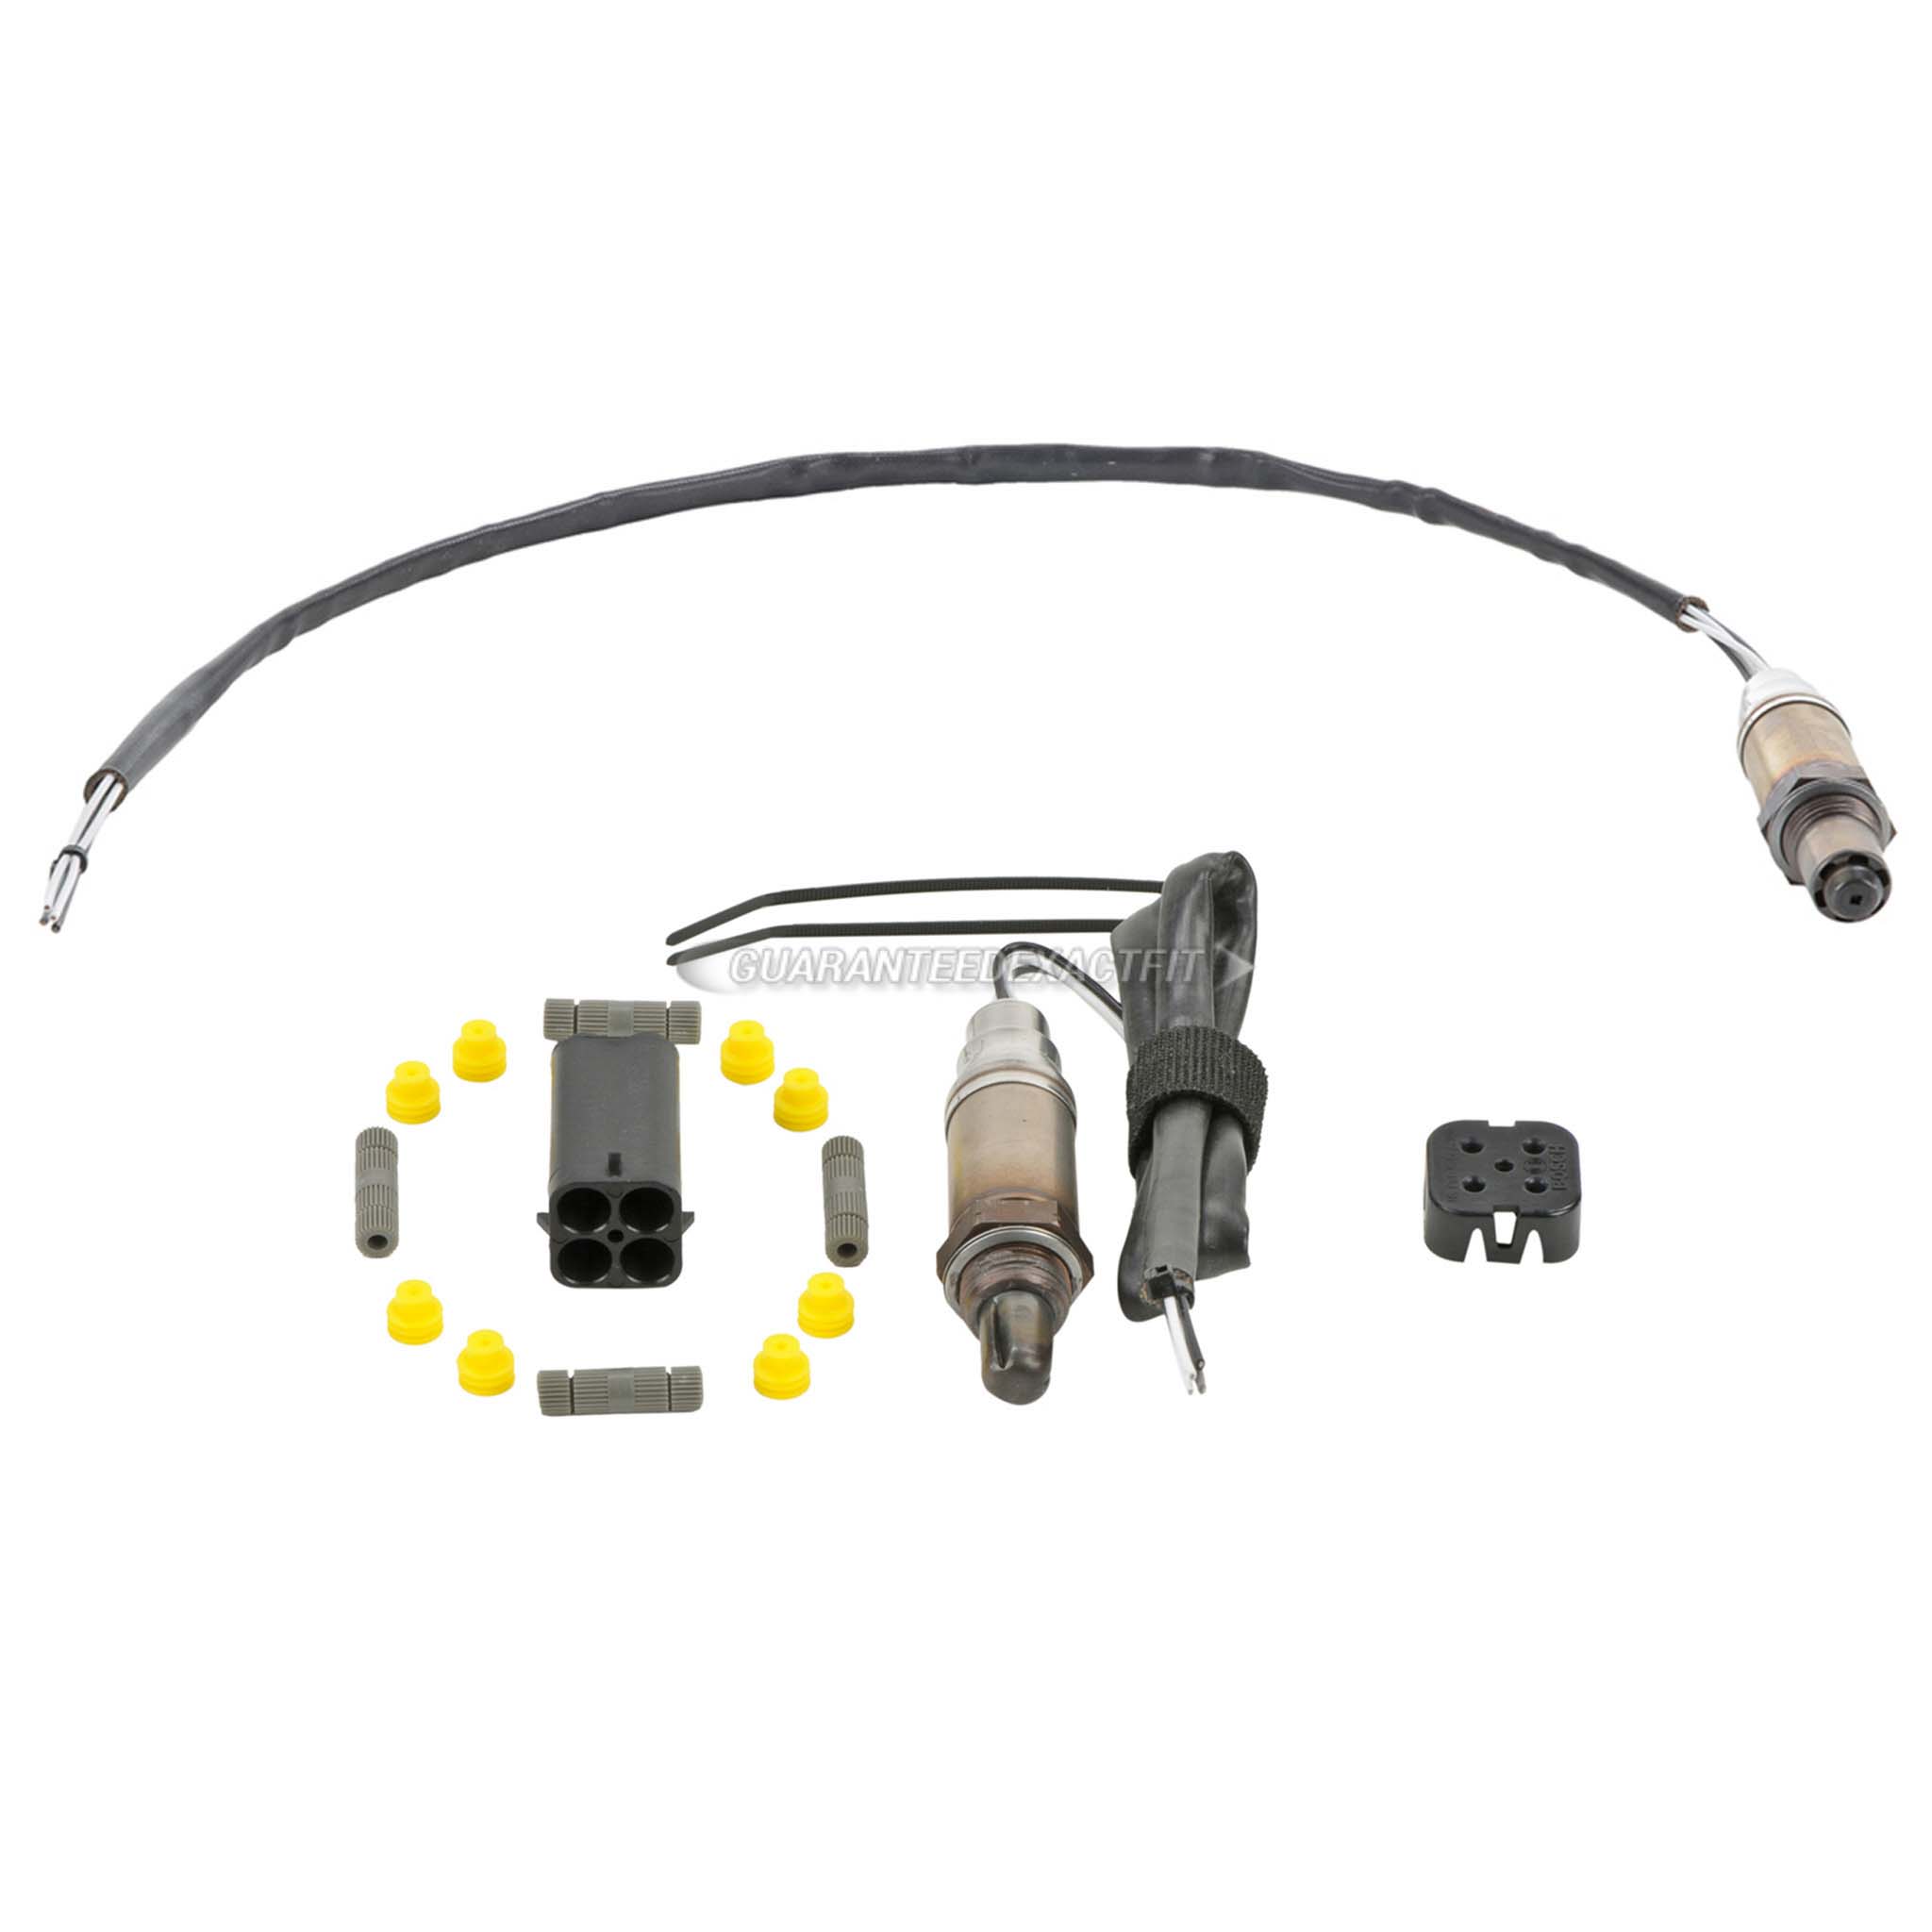  Plymouth Prowler oxygen sensor kit 